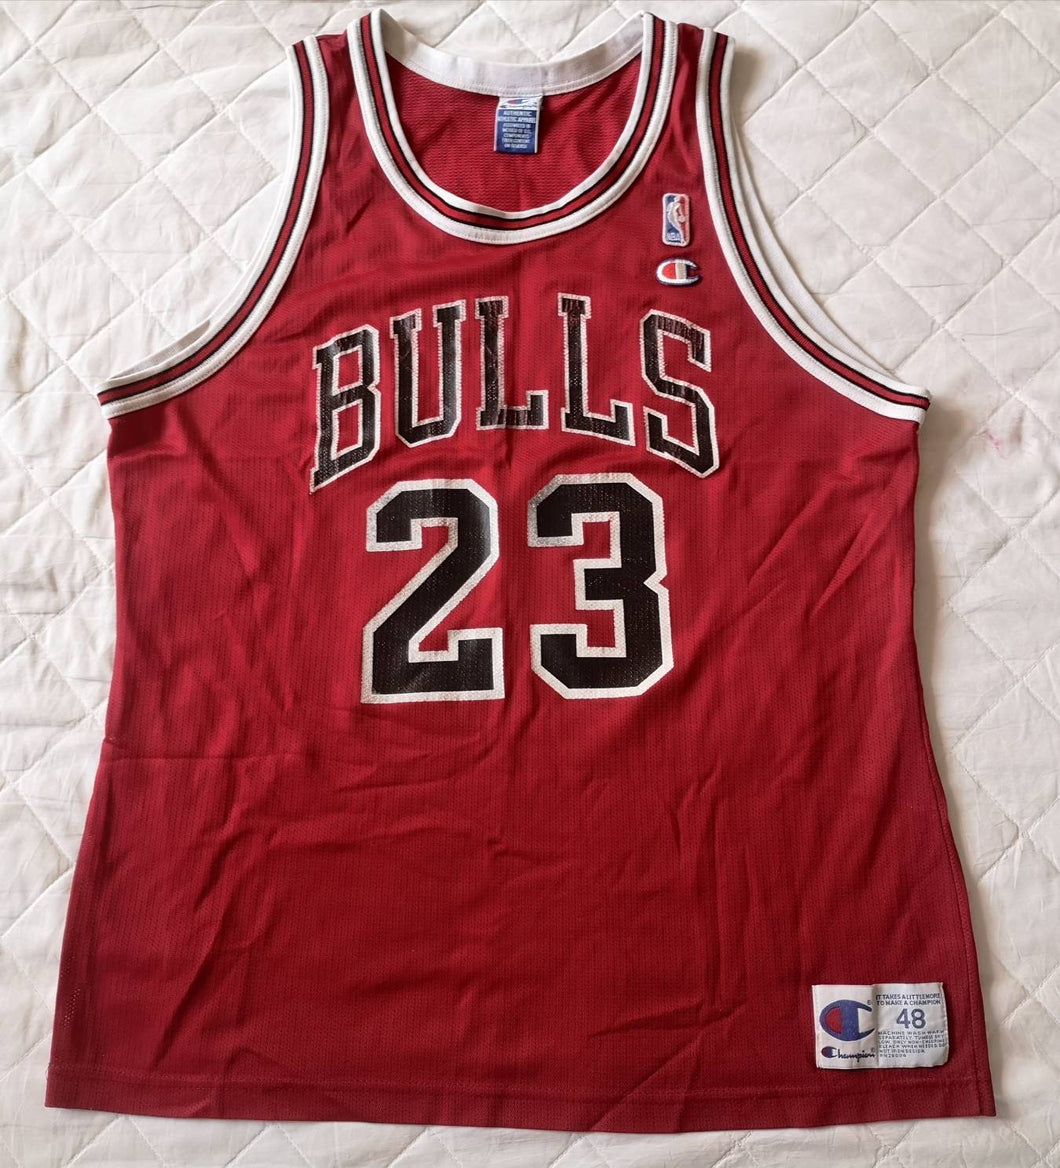 Authentic jersey Michael Jordan Chicago Bulls NBA 1996-97 Champion Vintage